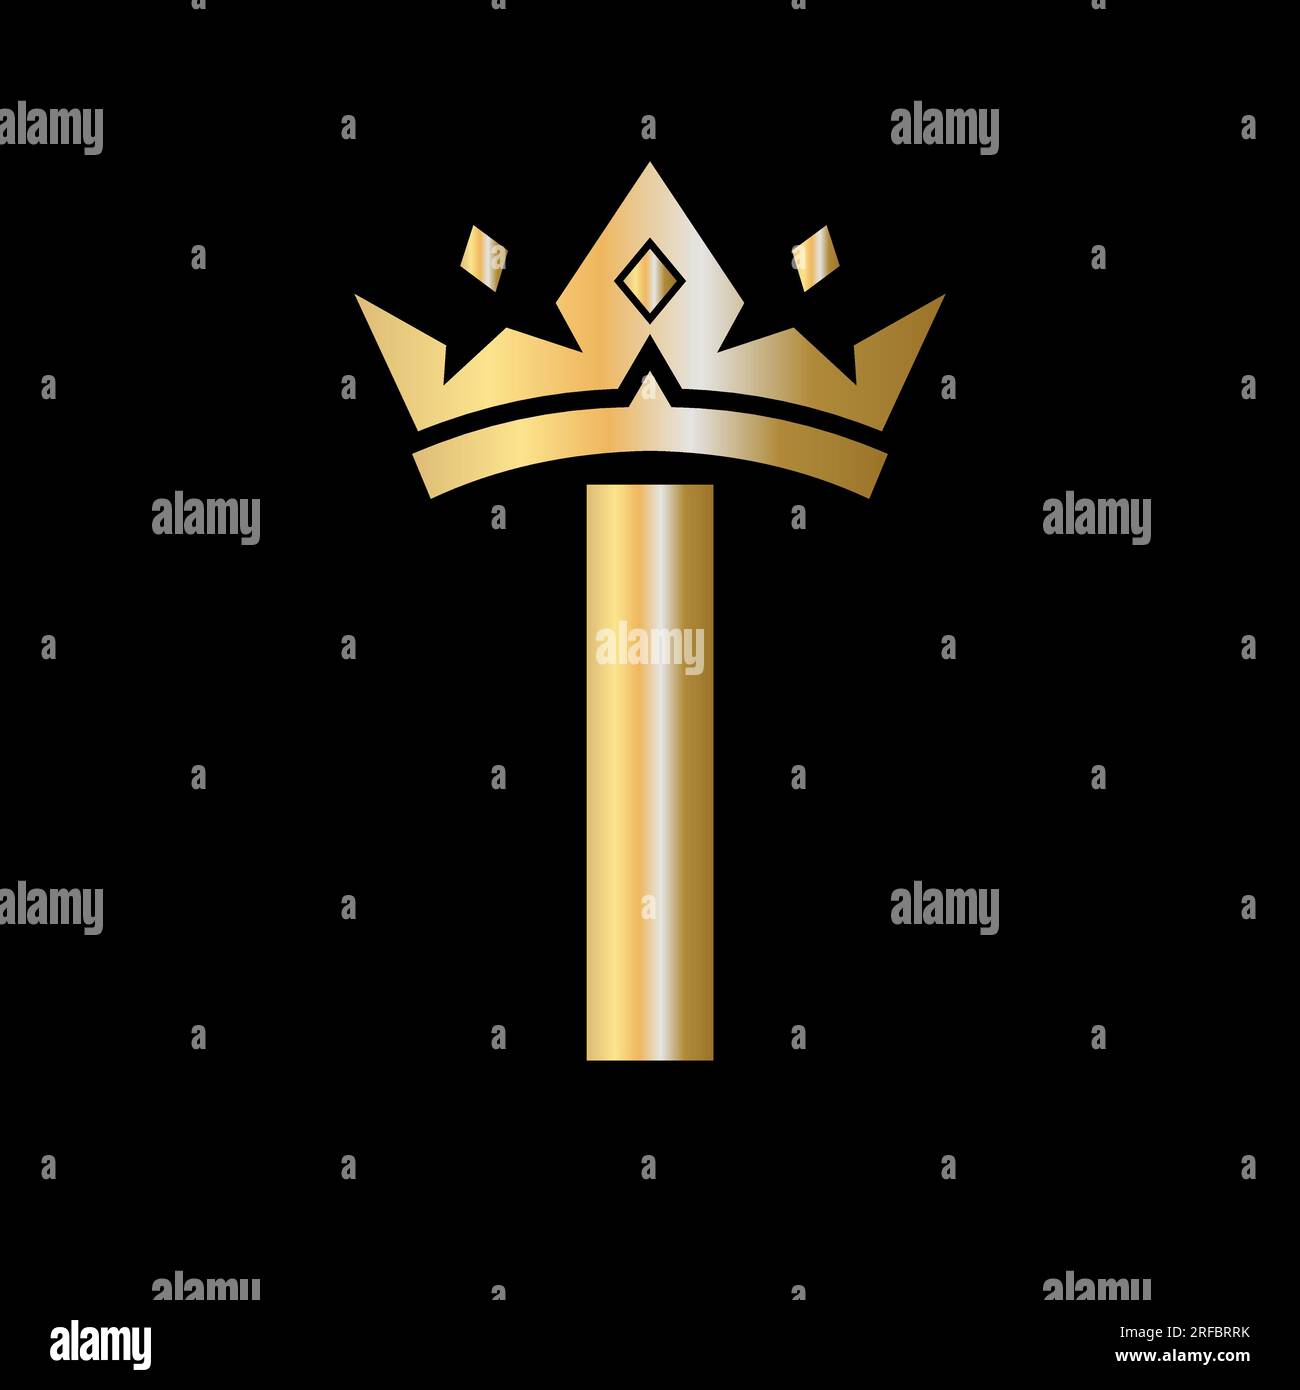 Letter I Crown Logo. Crown Logo on Letter I Vector Template for Beauty, Fashion, Star, Elegant, Luxury Sign Stock Vector